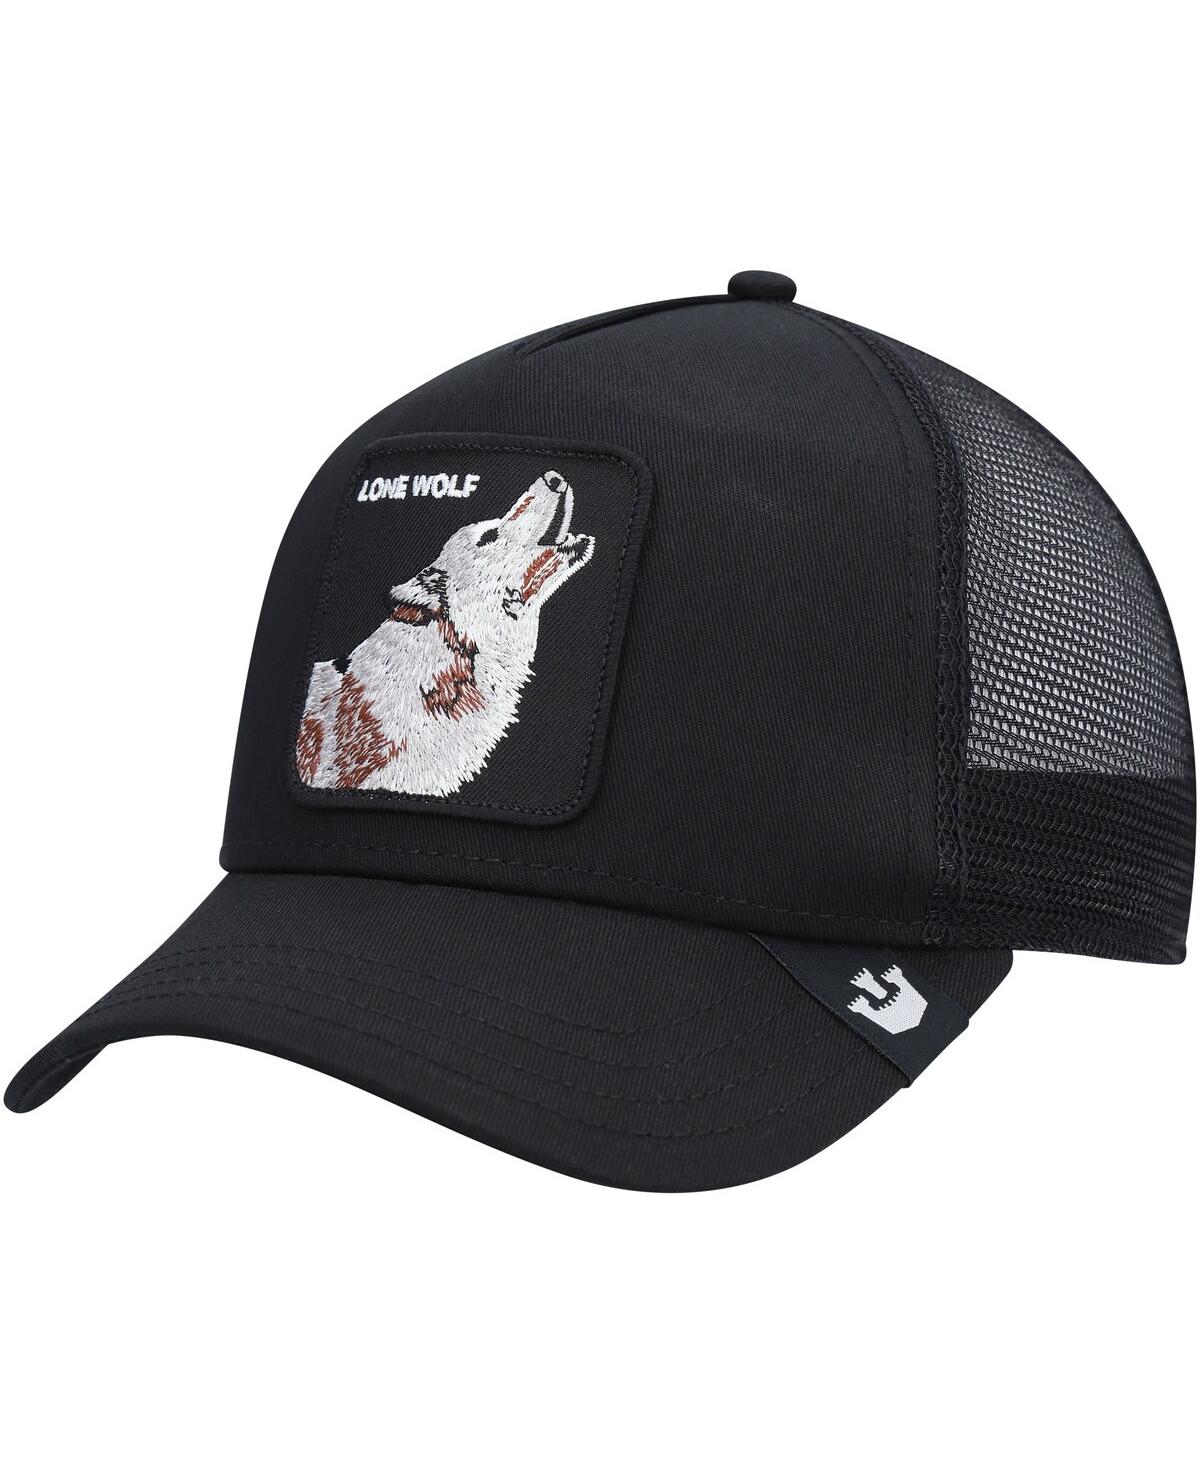 Goorin Bros Men's . Black The Lone Wolf Trucker Snapback Hat